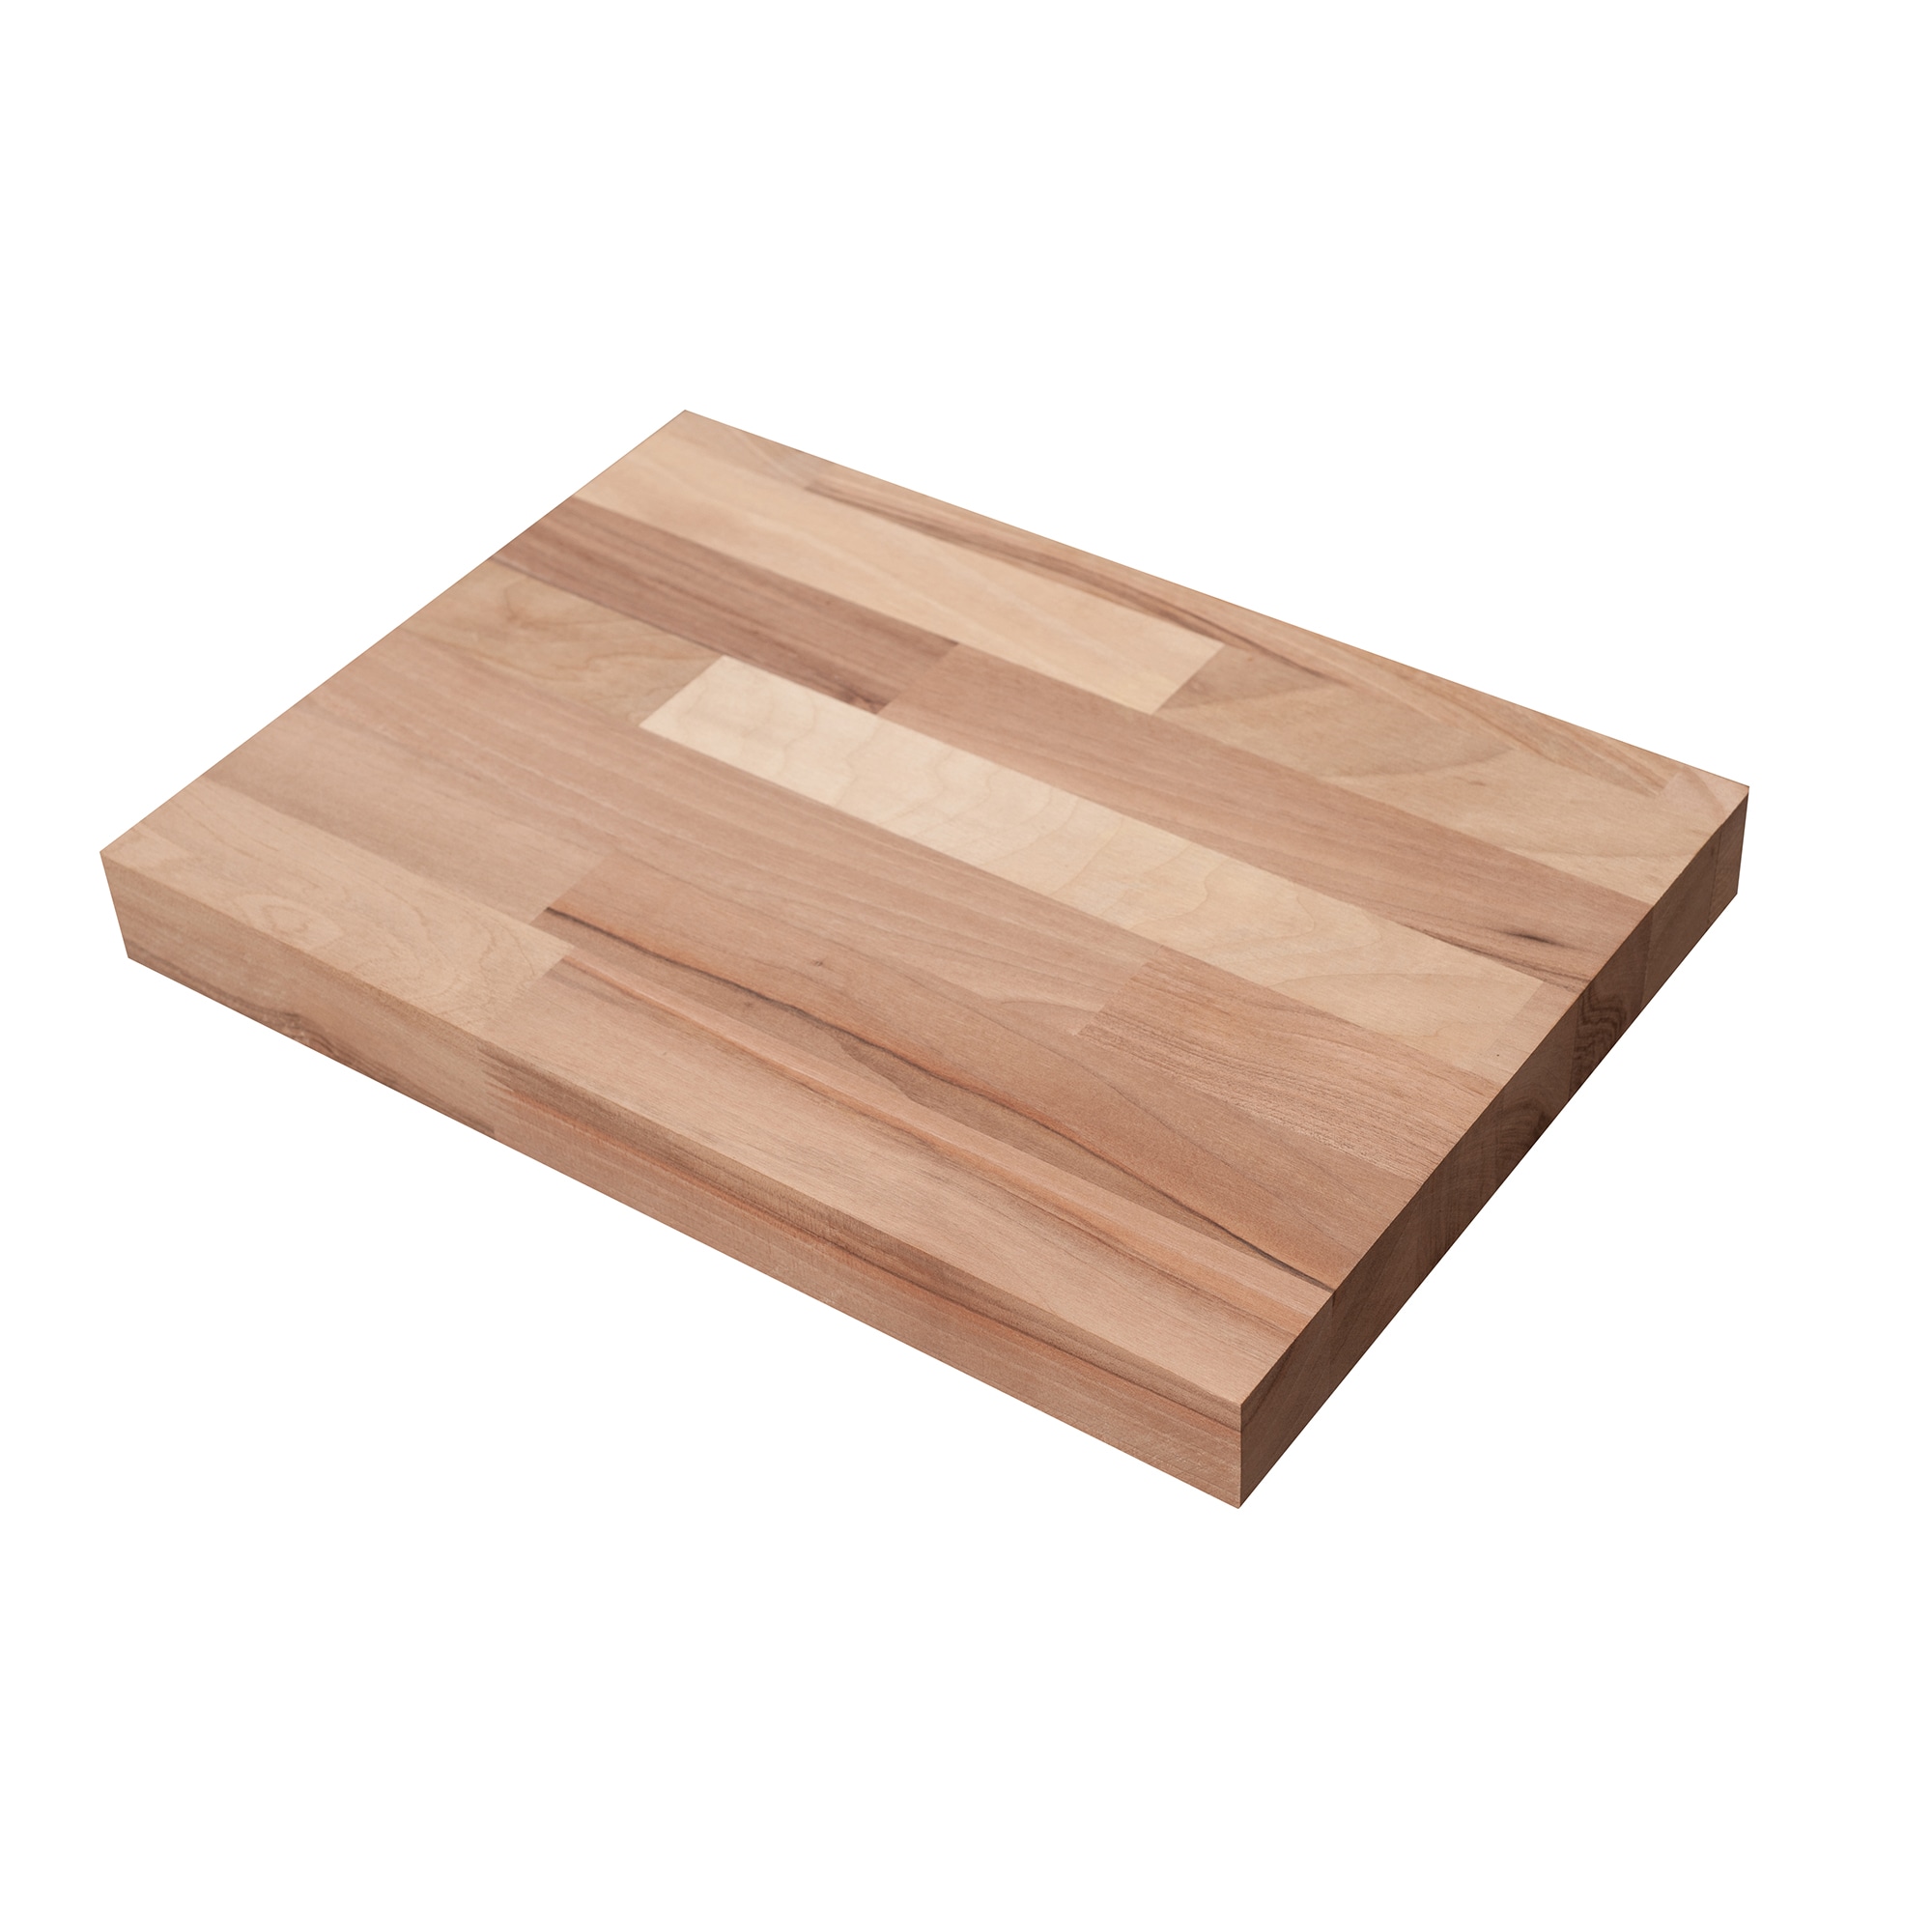 Regency Hardwood Cutting Board Insert for Wire Shelving - 18 x 36 x 1